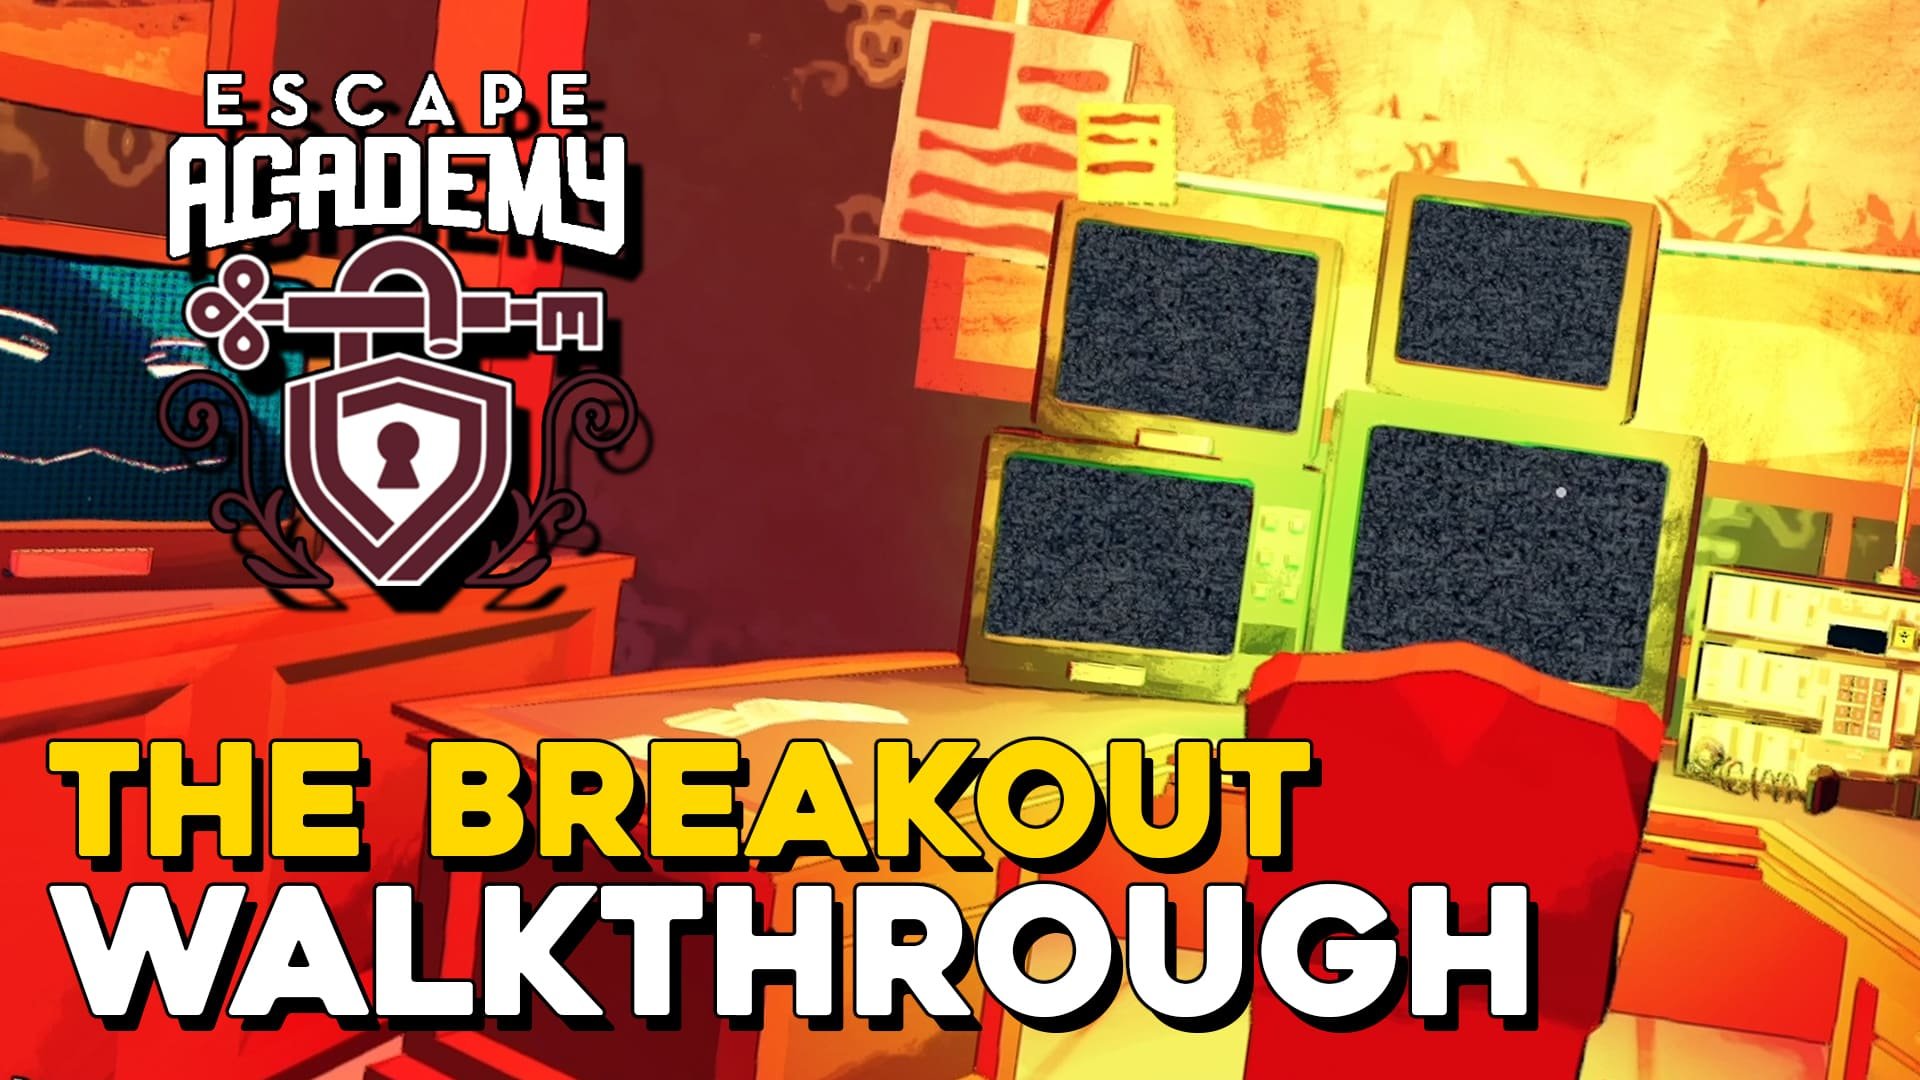 Escape Academy The Breakout Walkthrough (copia)